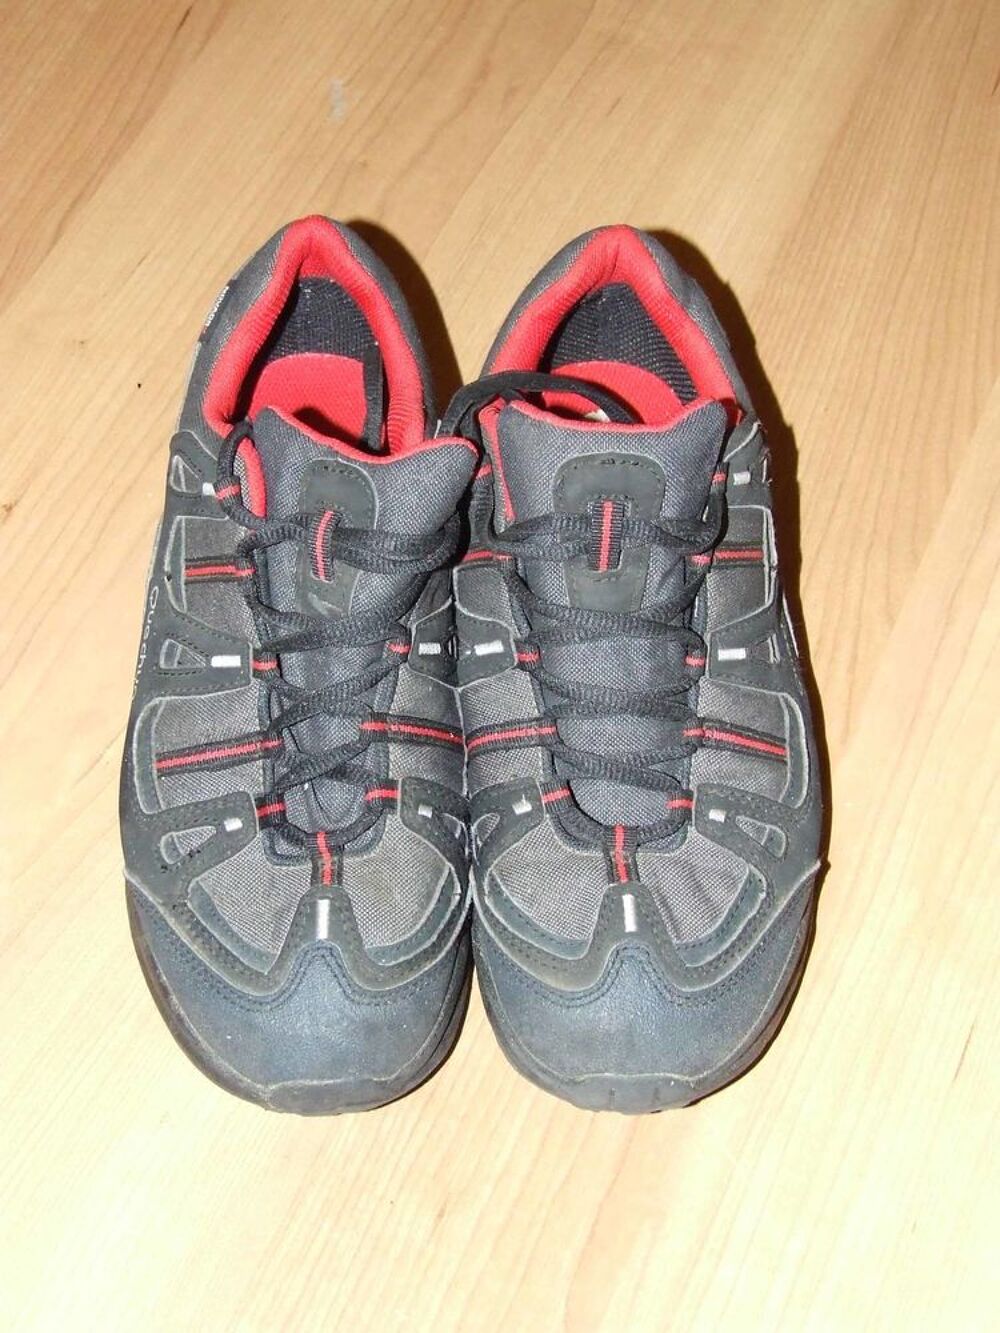 Chaussures de randonn&eacute;e Quechua, Novadry, Pointure 39, TBE Chaussures